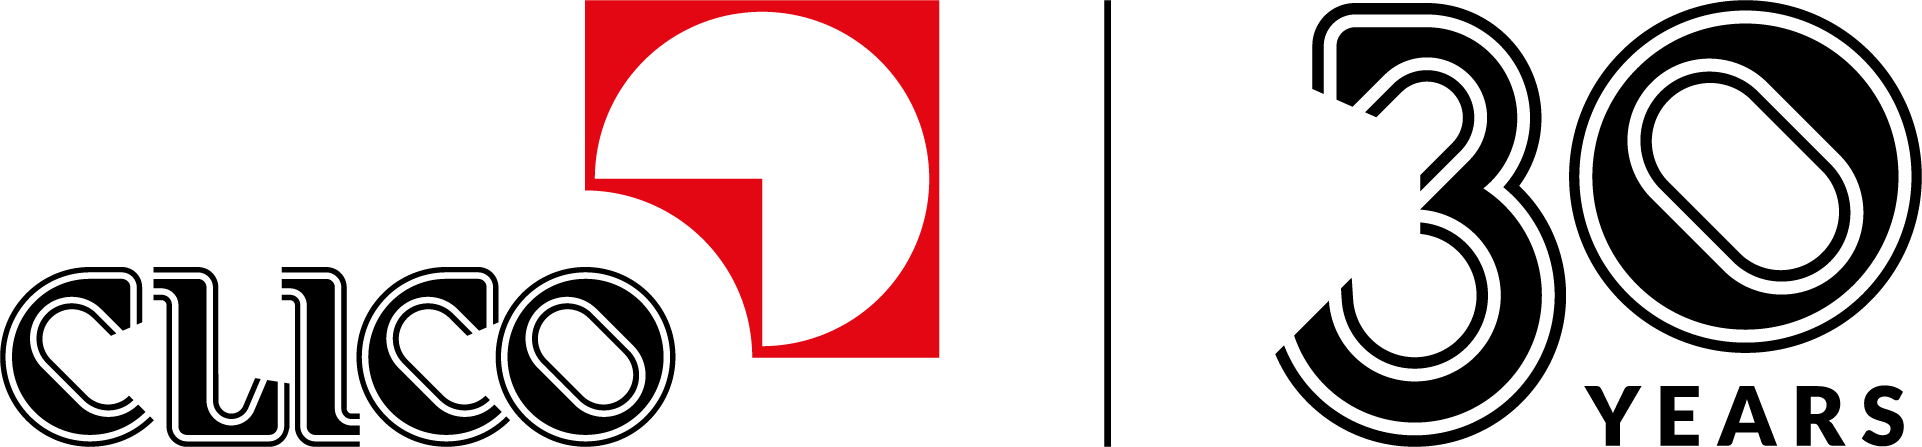 Clico logo